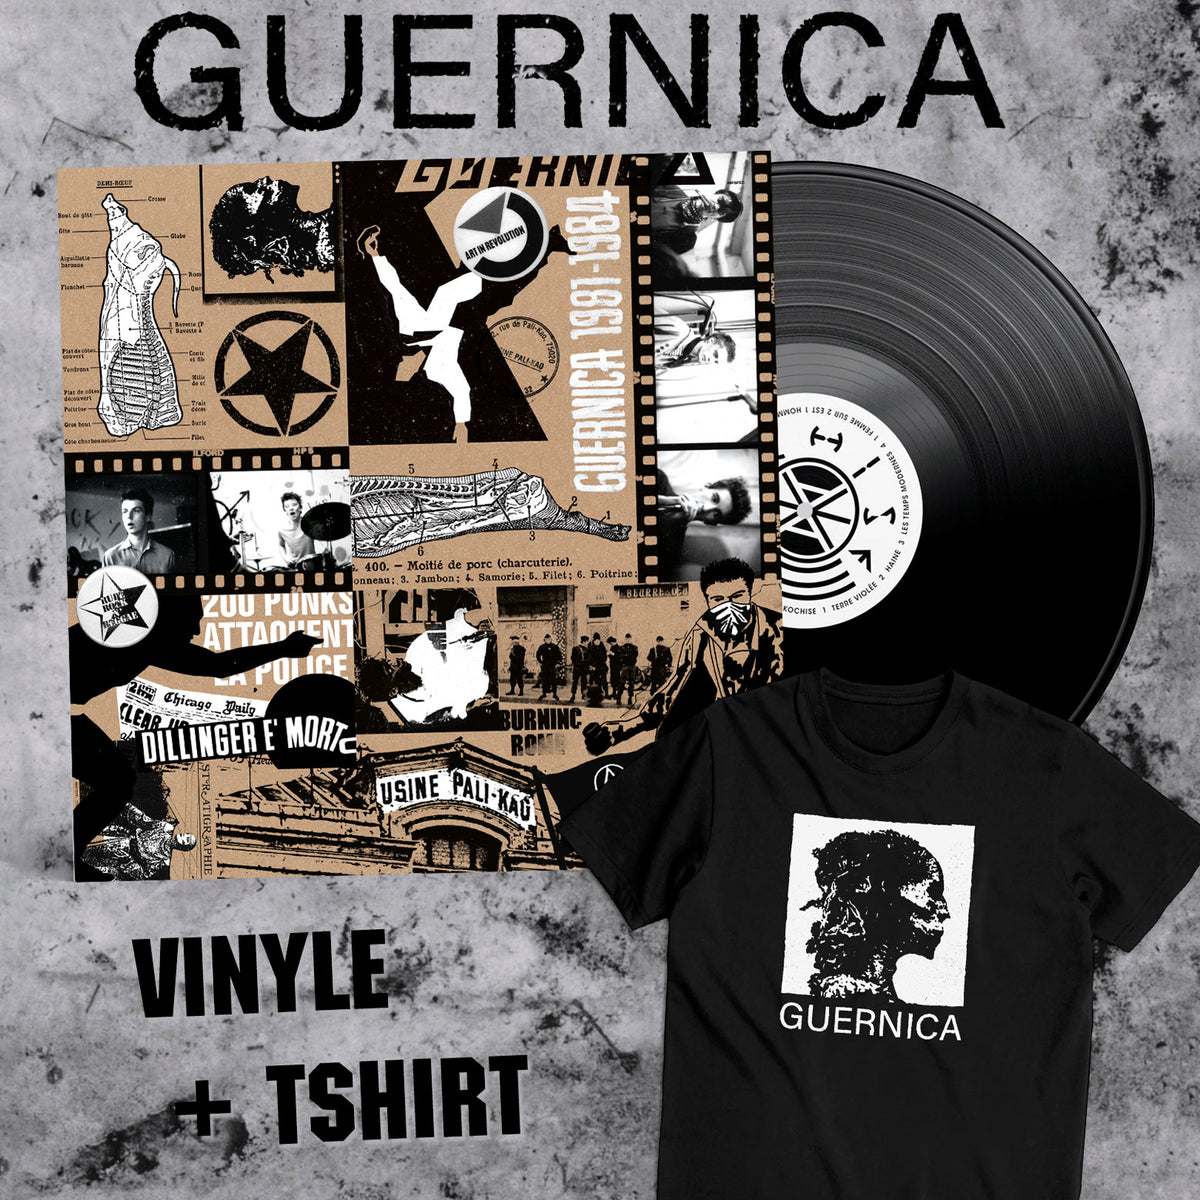 GUERNICA "1981-1984", pack vinyle + T-shirt